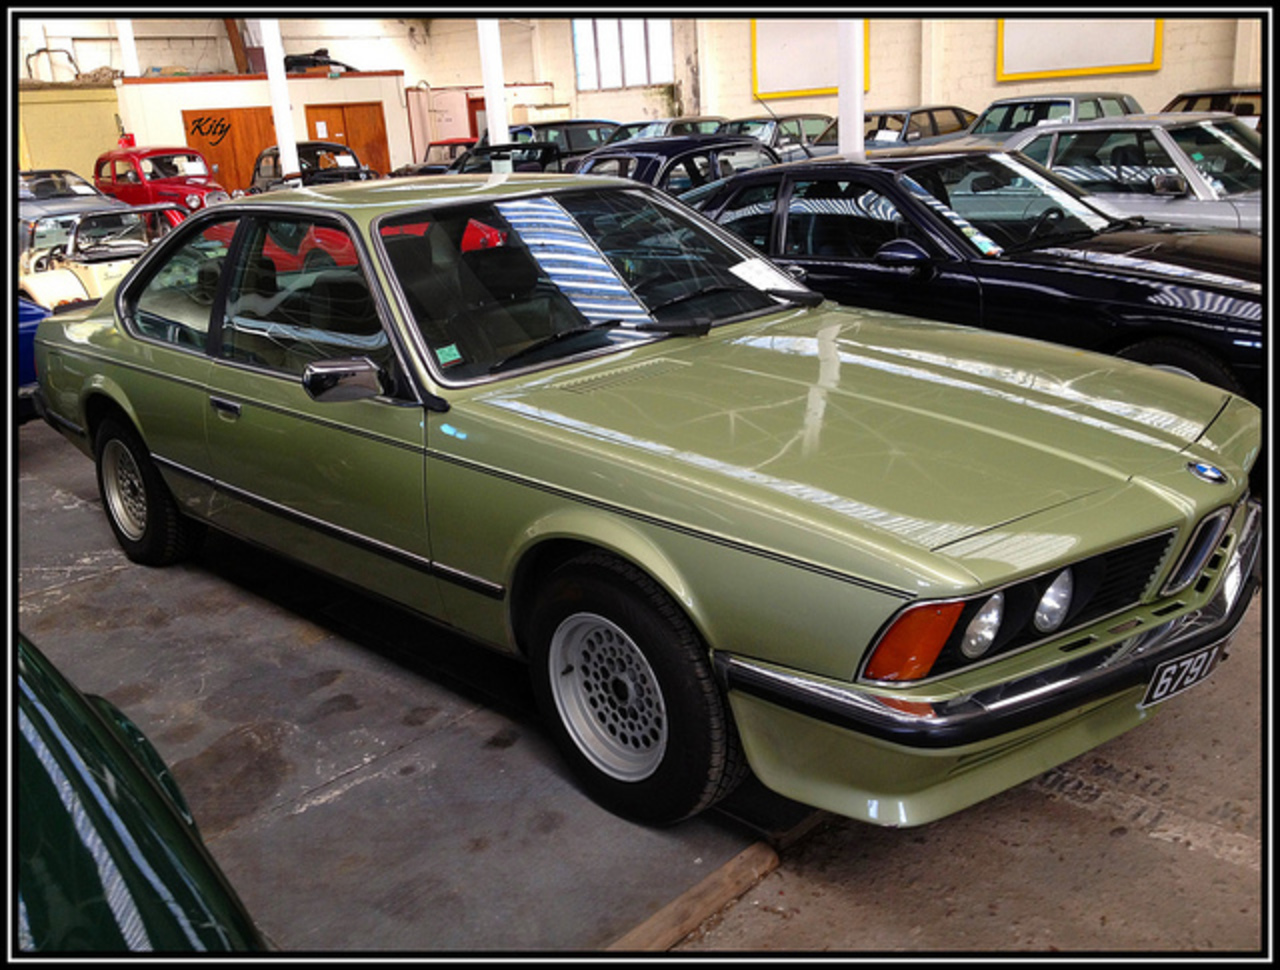 BMW 630 CS - 1976 | Flickr - Photo Sharing!